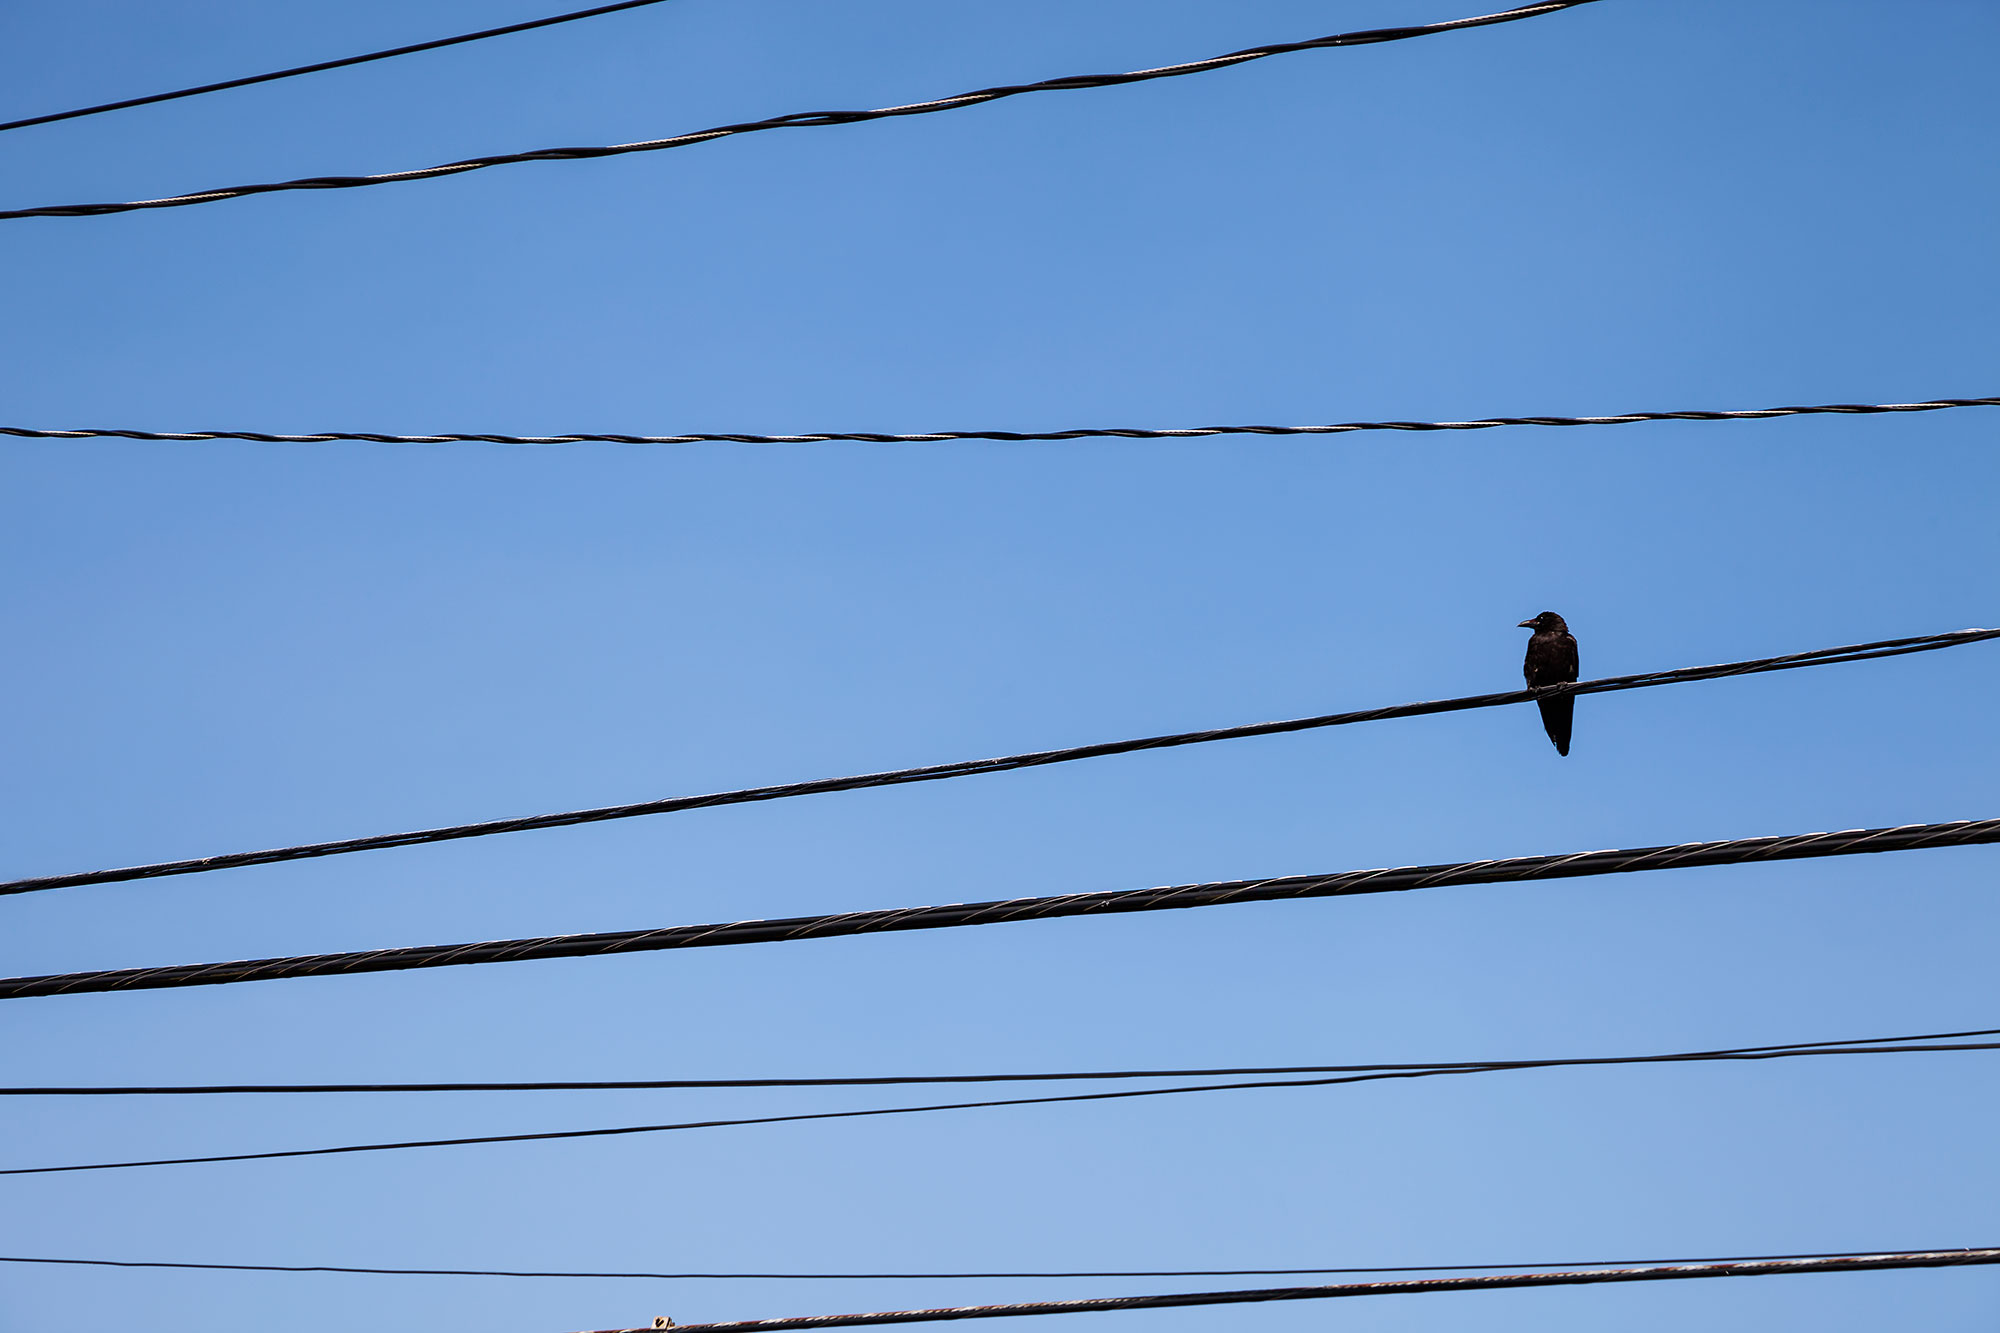 Bird on a wire by Marili Clark Photographer.